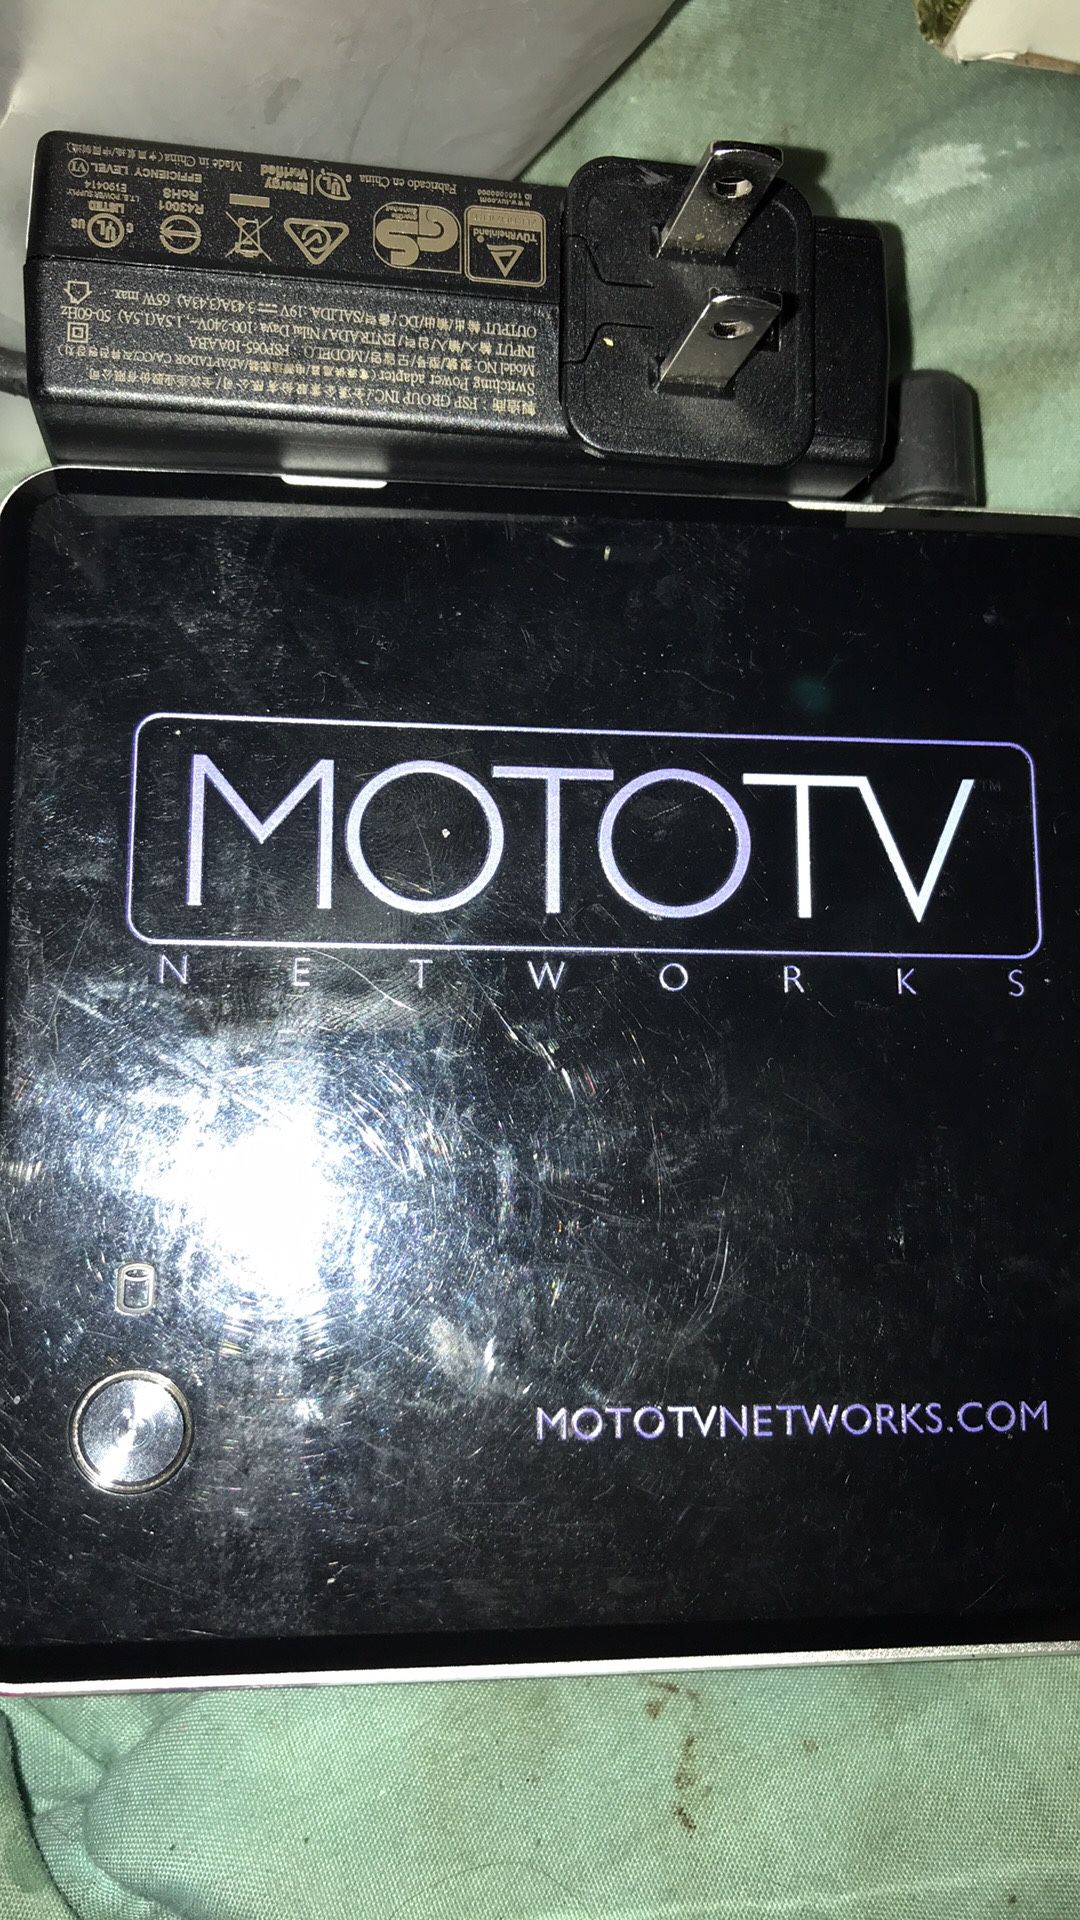 Moto Tv